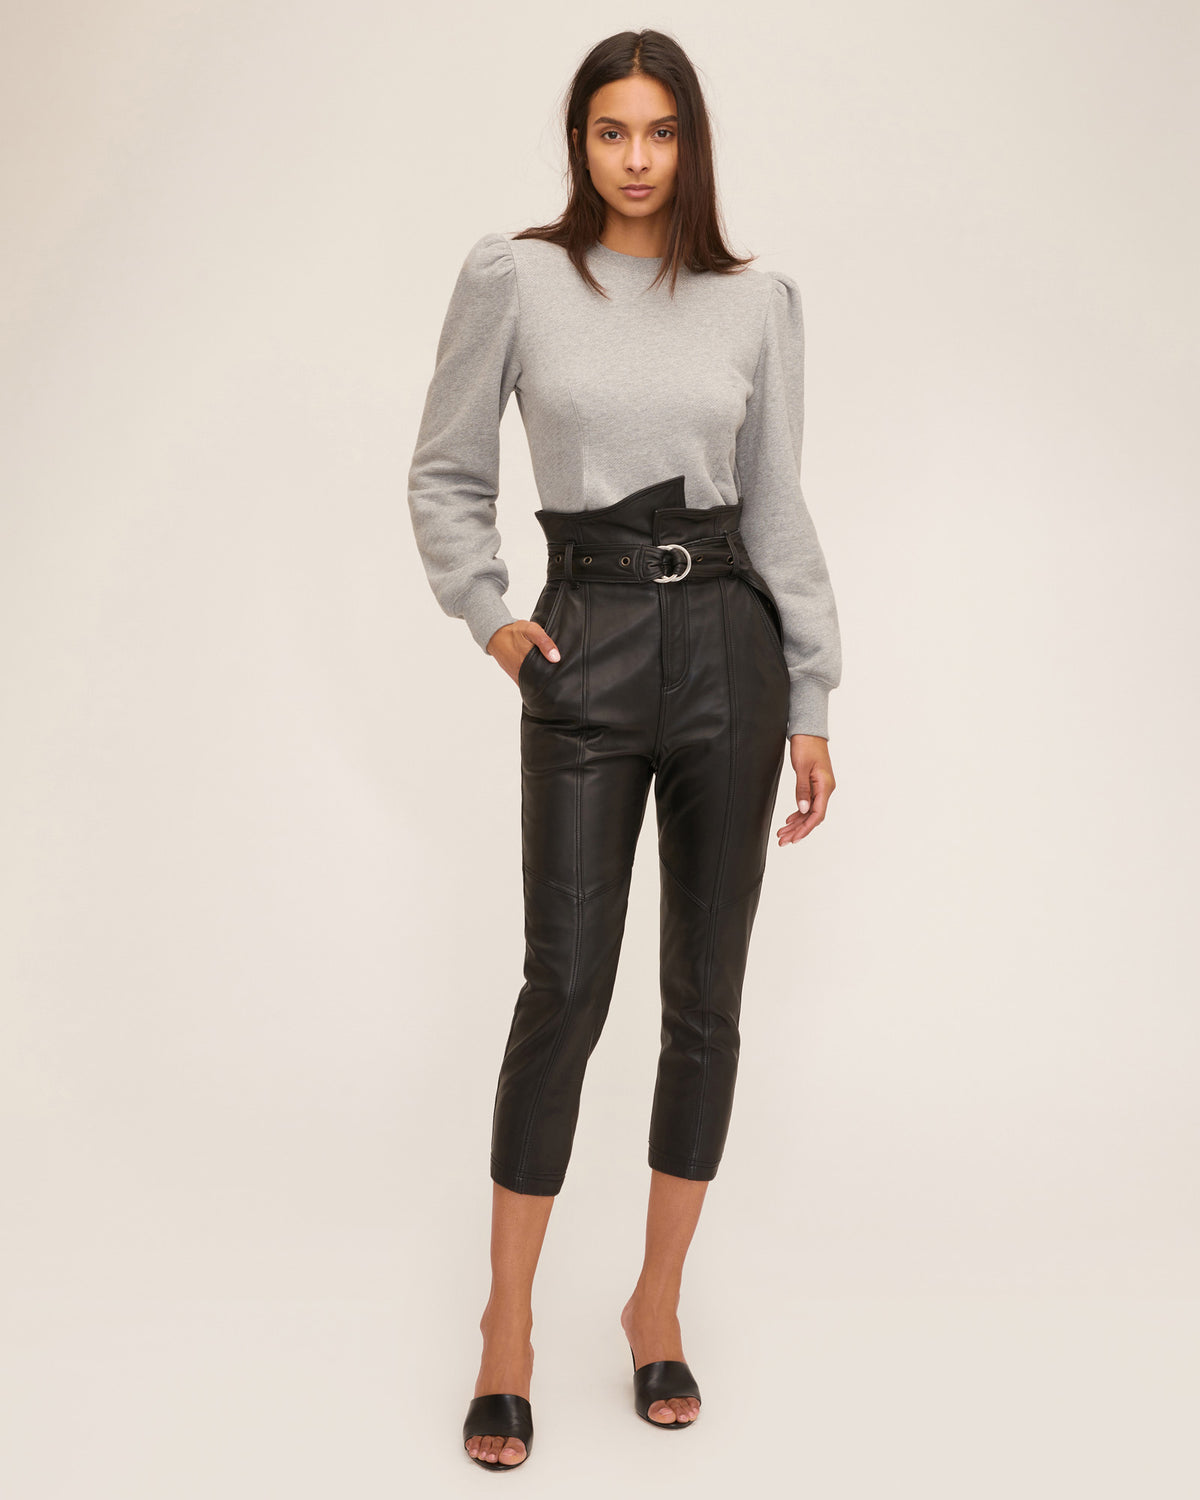 Anniston Leather Pant in Black | MARISSA WEBB | MARISSA WEBB